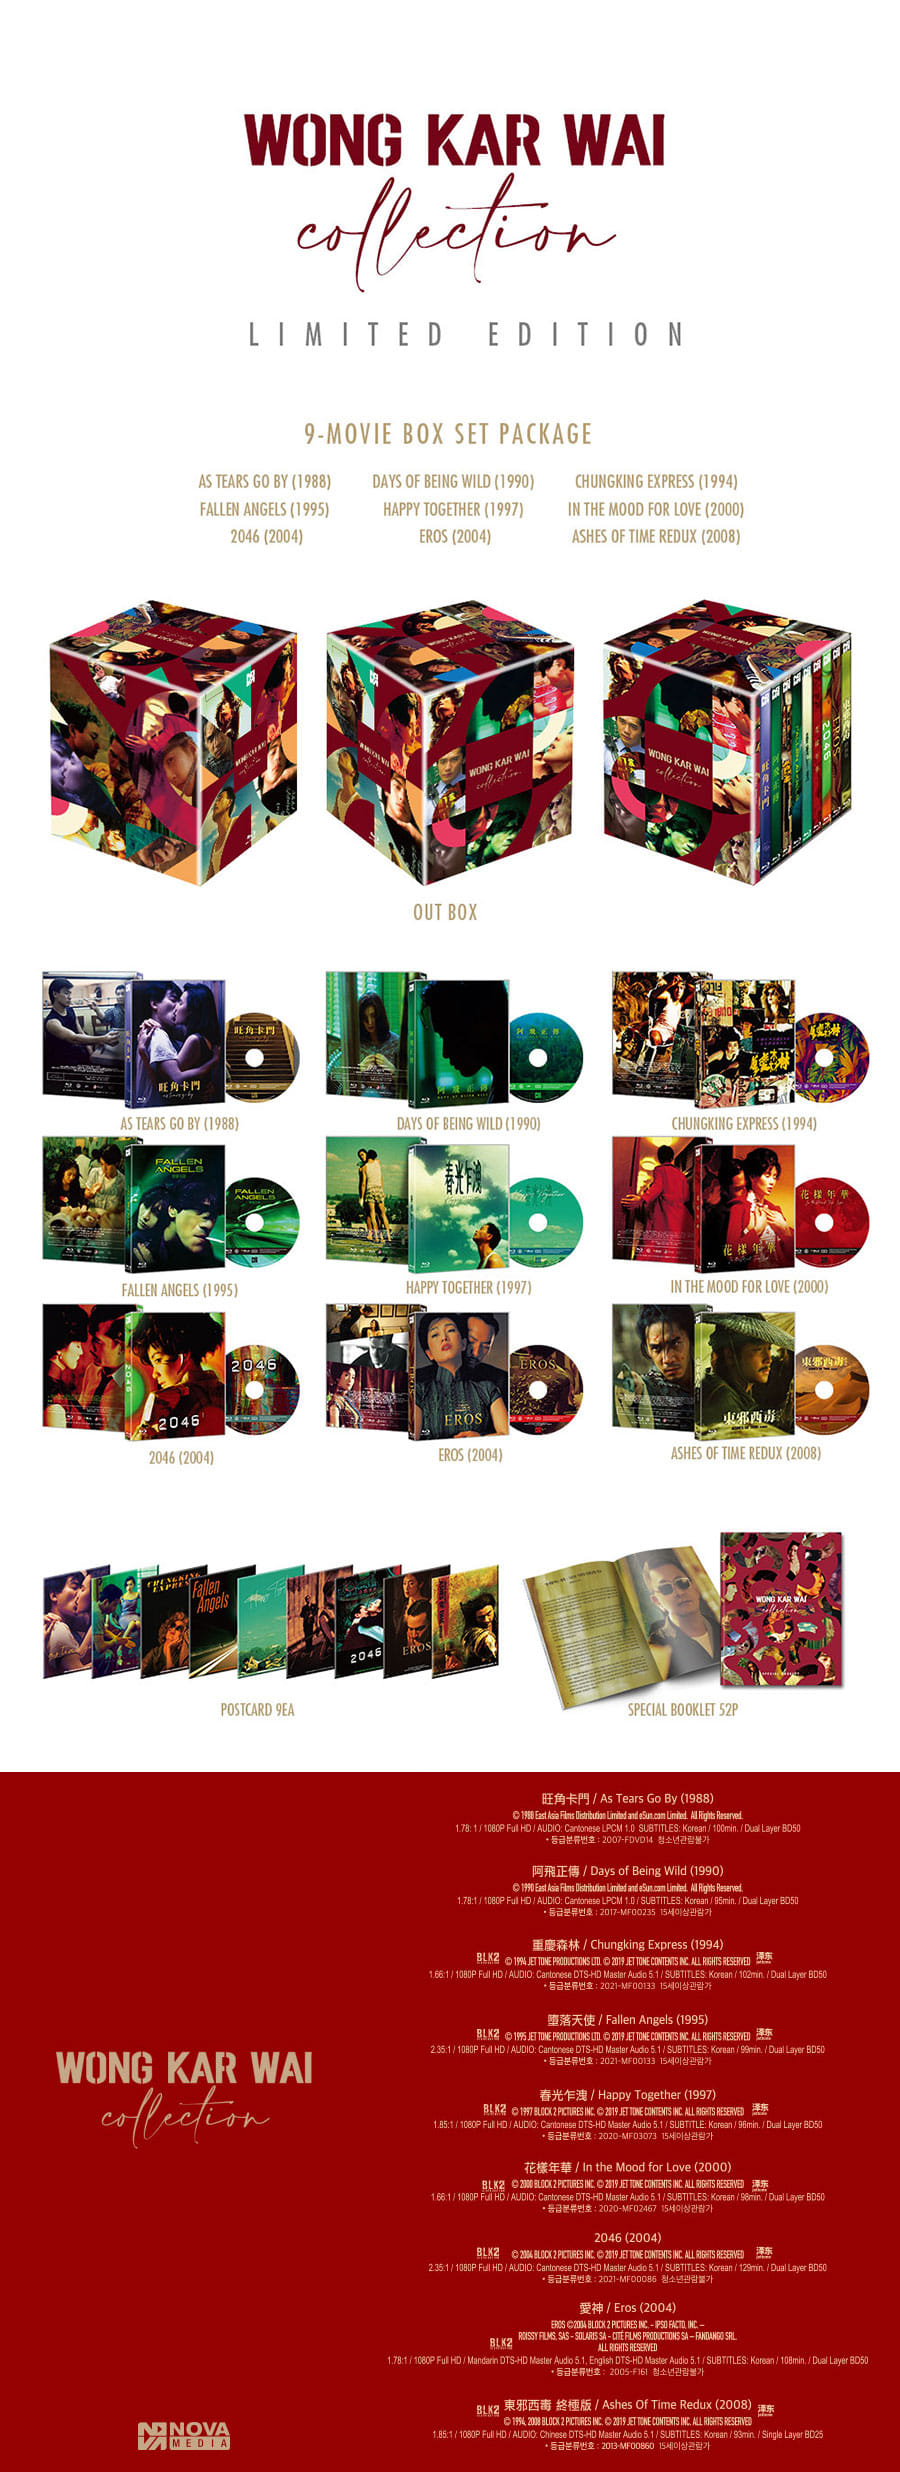 nuevo/sellado Novamedia Eros Blu-ray Con Slipcover Lenticular Wong Kar Wai 